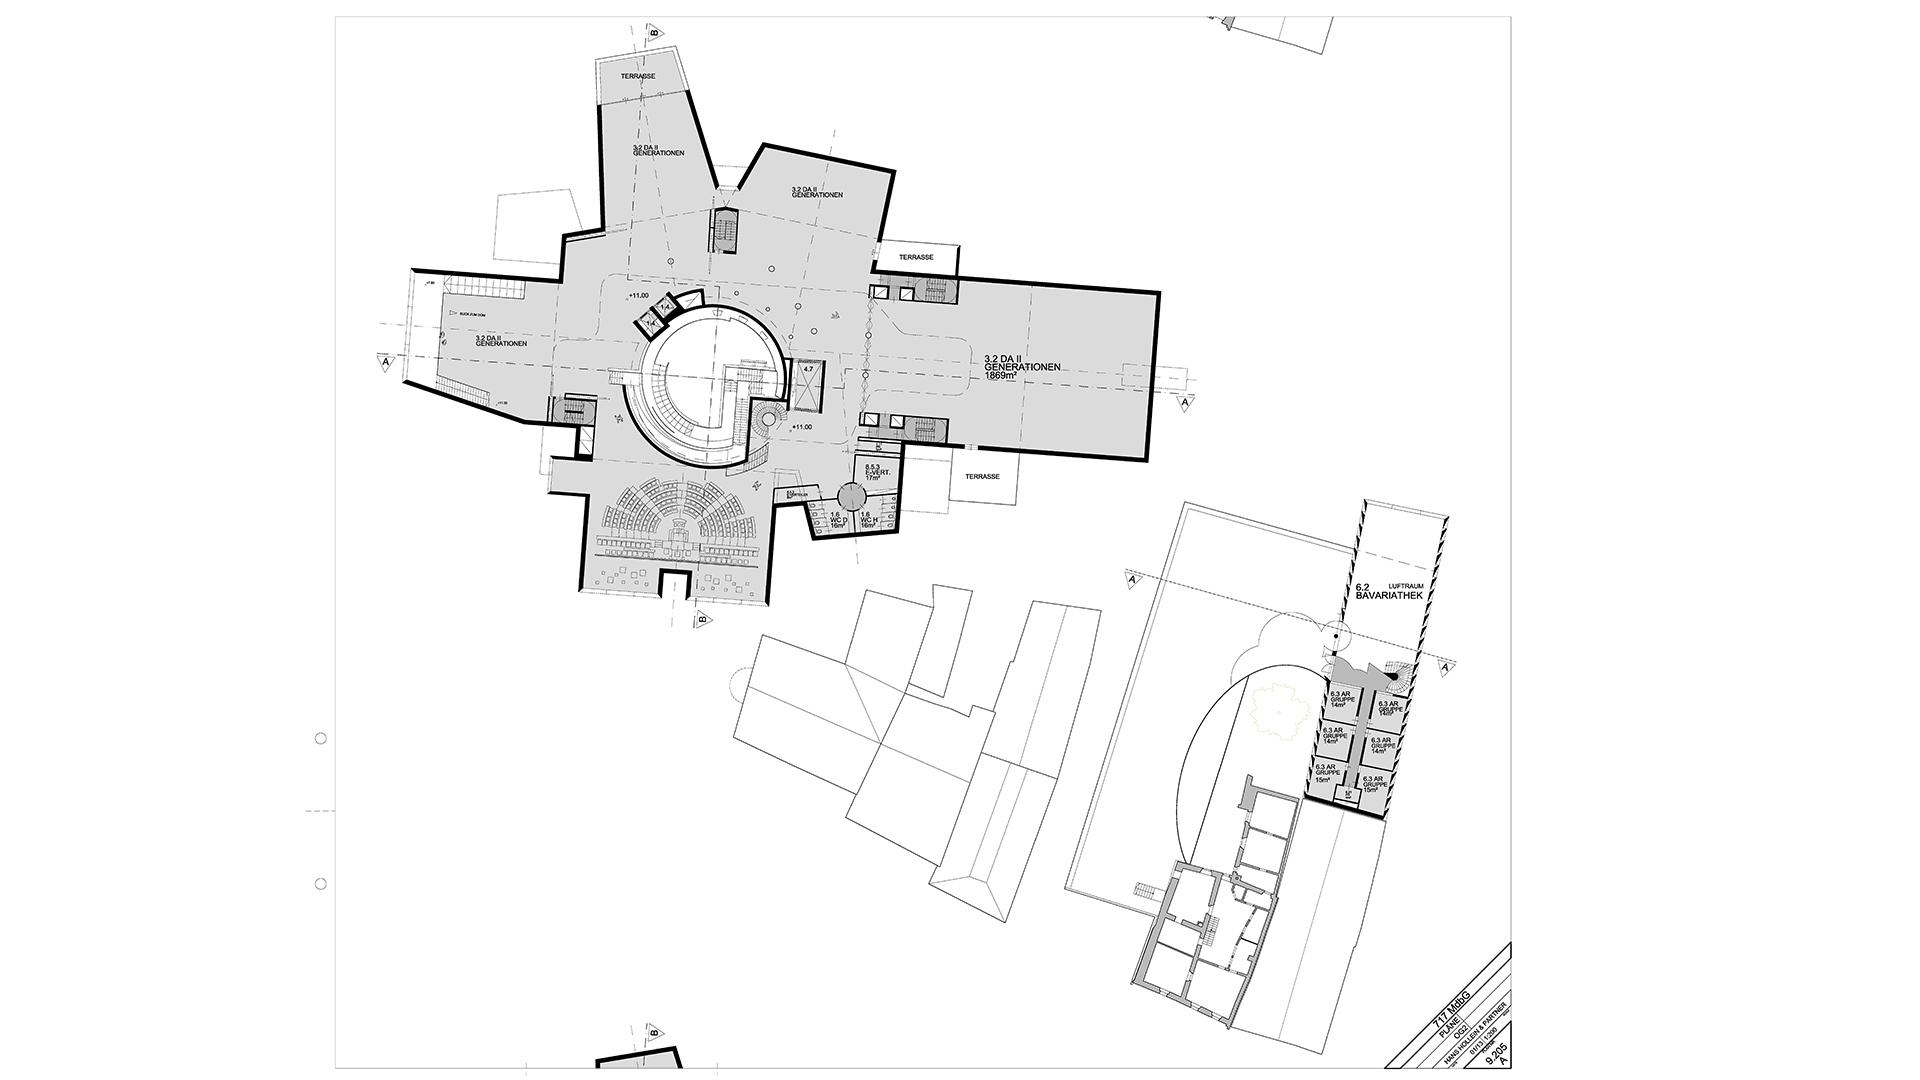 OHA - 717 MUSEUM BAYERISCHE GESCHICHTE 14 - Office For Heuristic Architecture